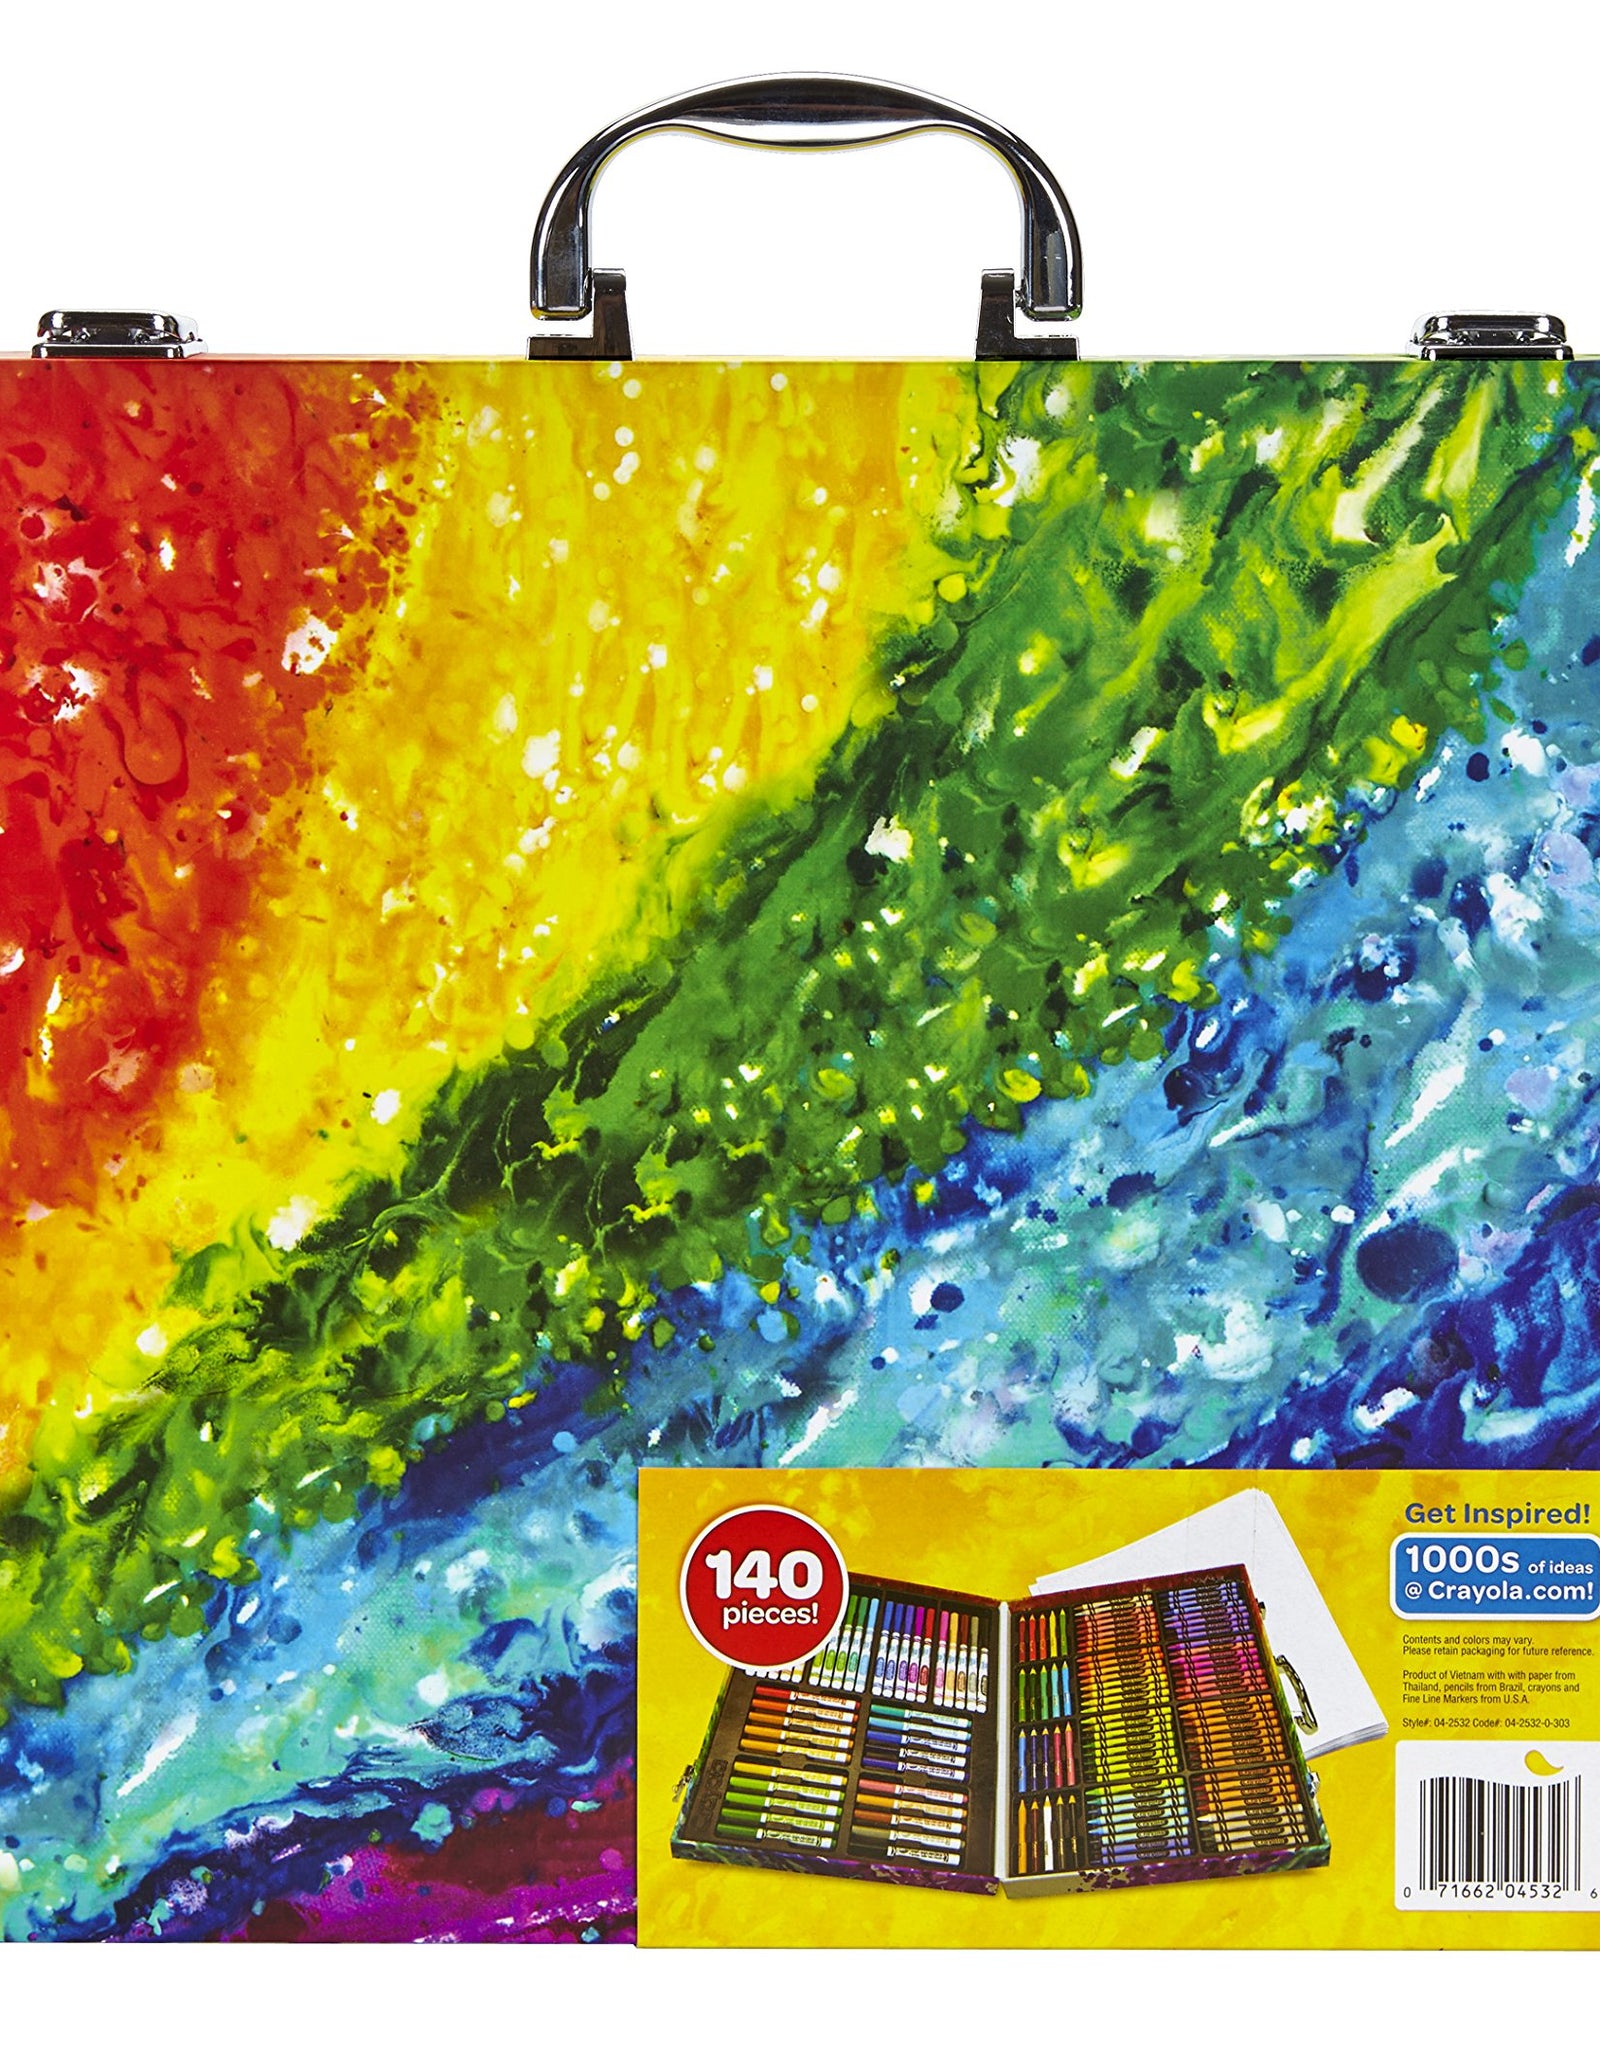 Crayola Inspiration Art Case Coloring Set, Gift for Kids, 140 Art Supplies